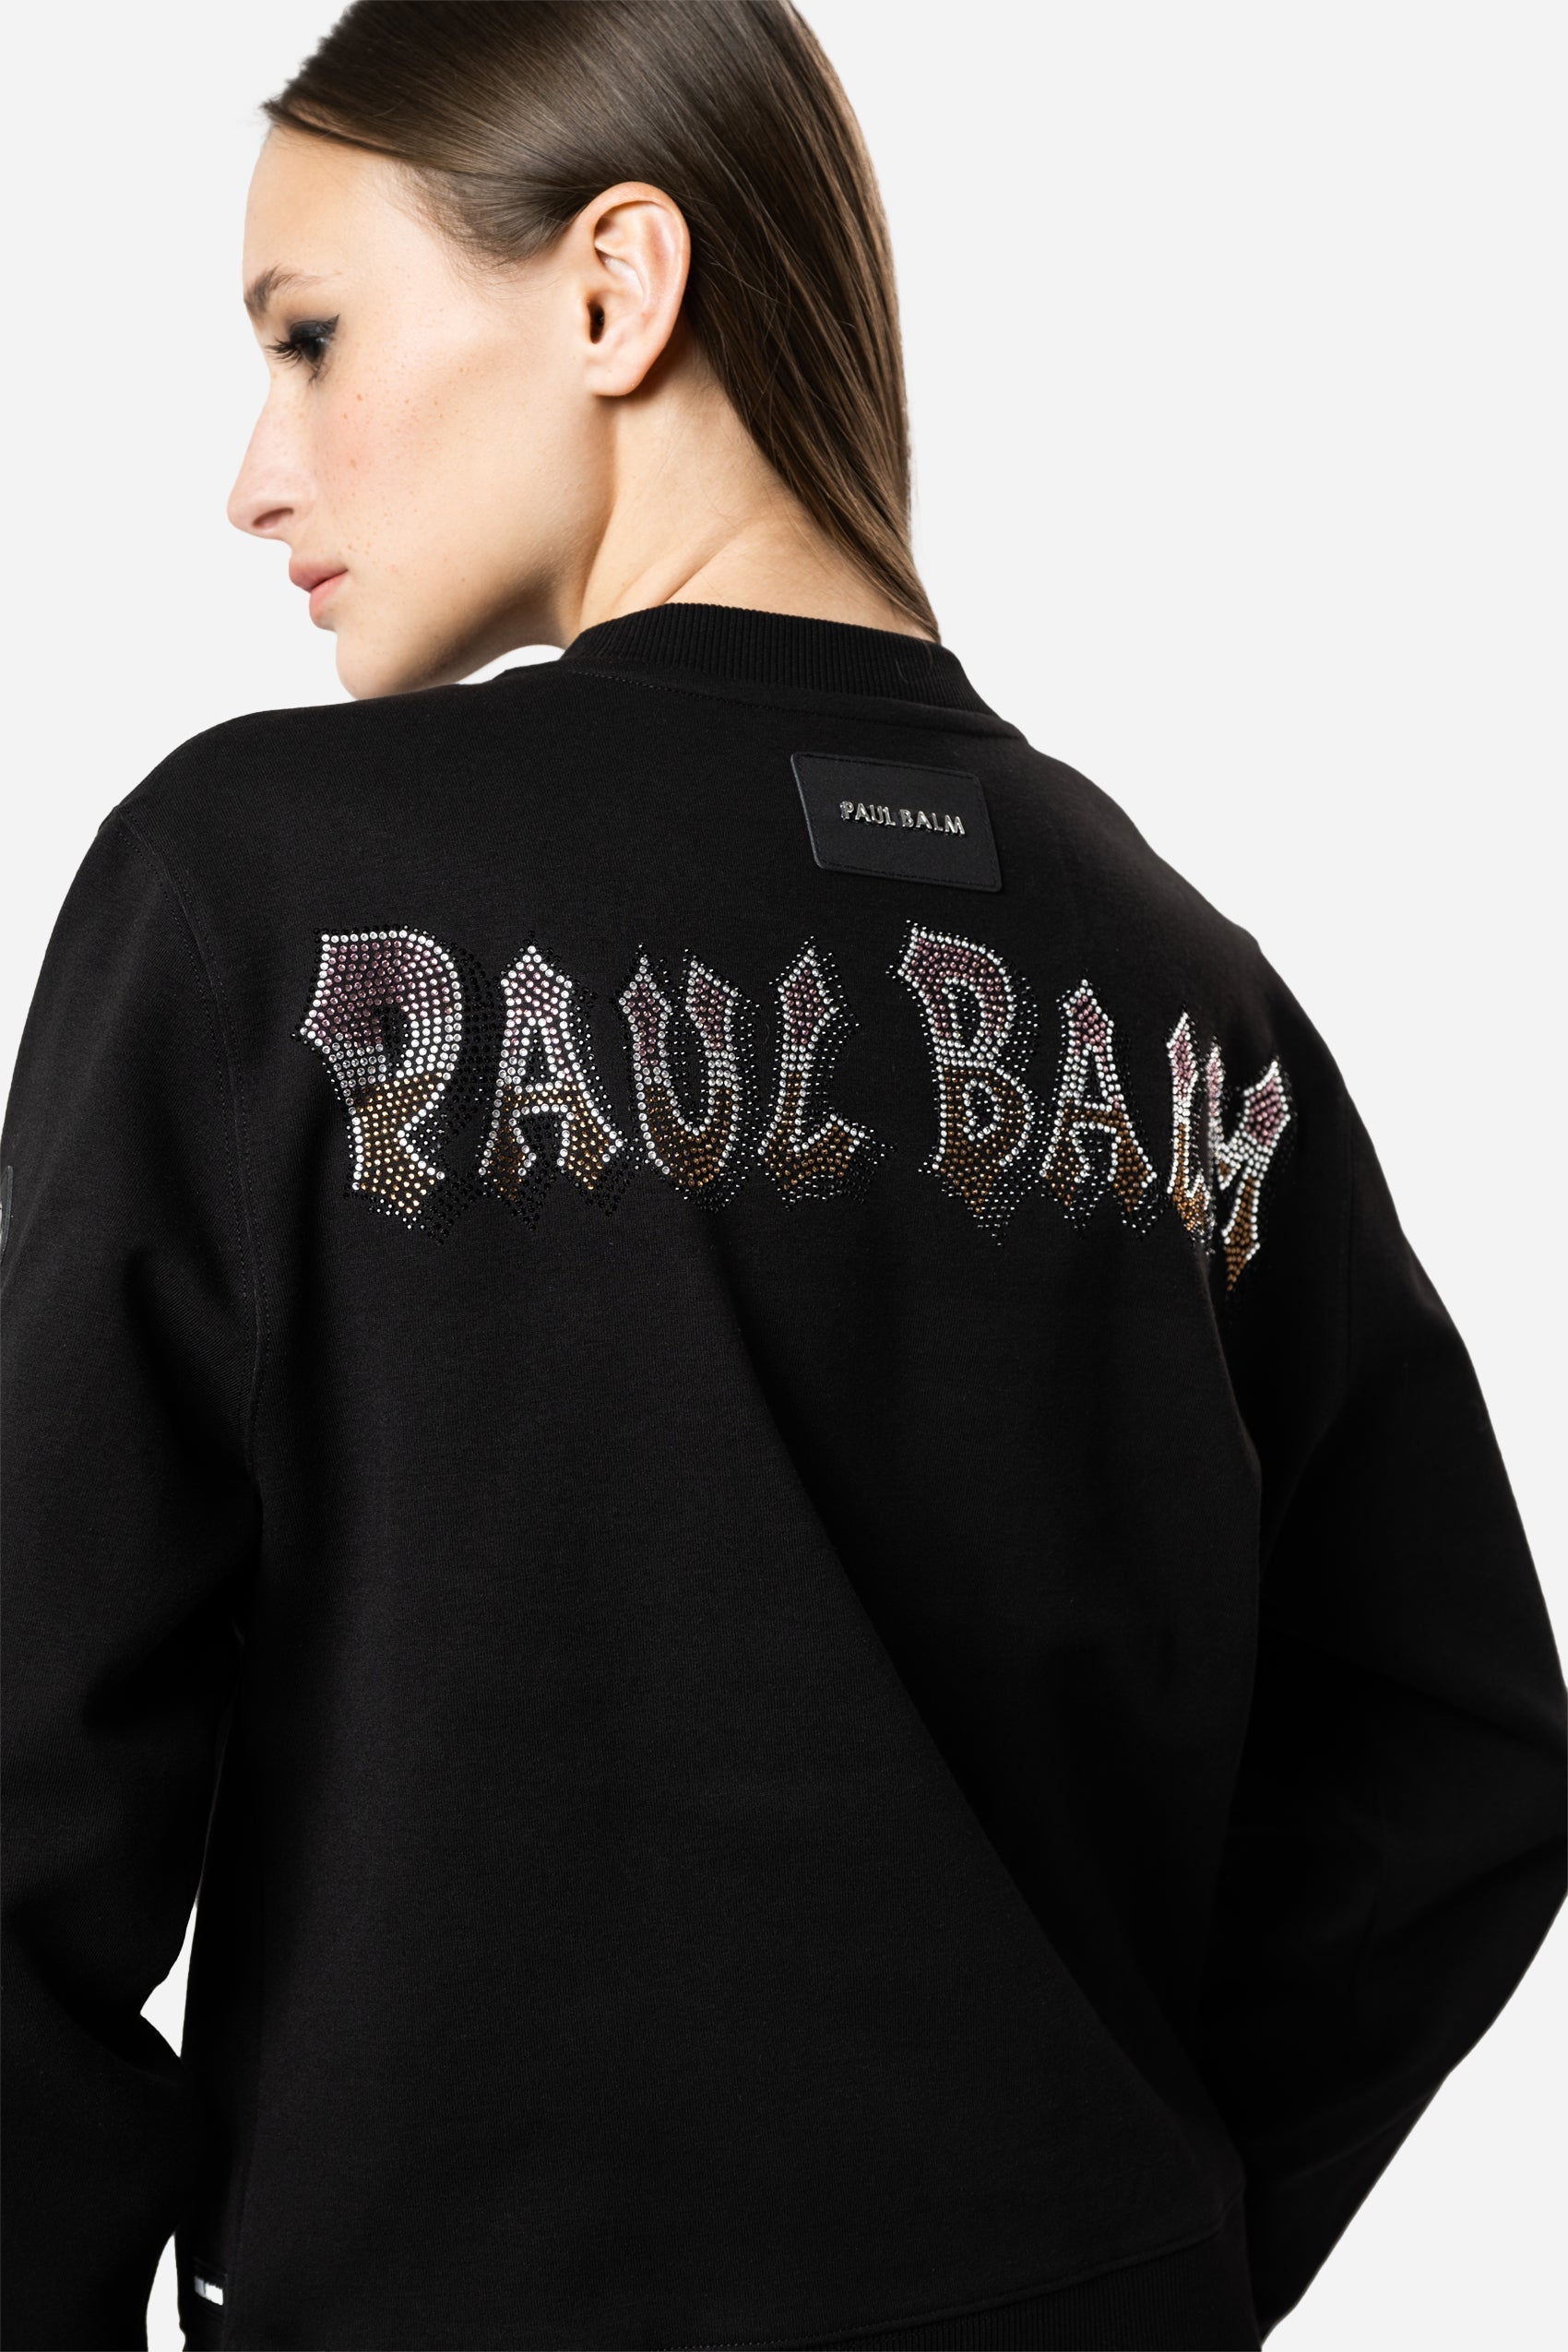 Crystal Elly Sweatshirt - Limited to 300 - PAUL BALM WORLD